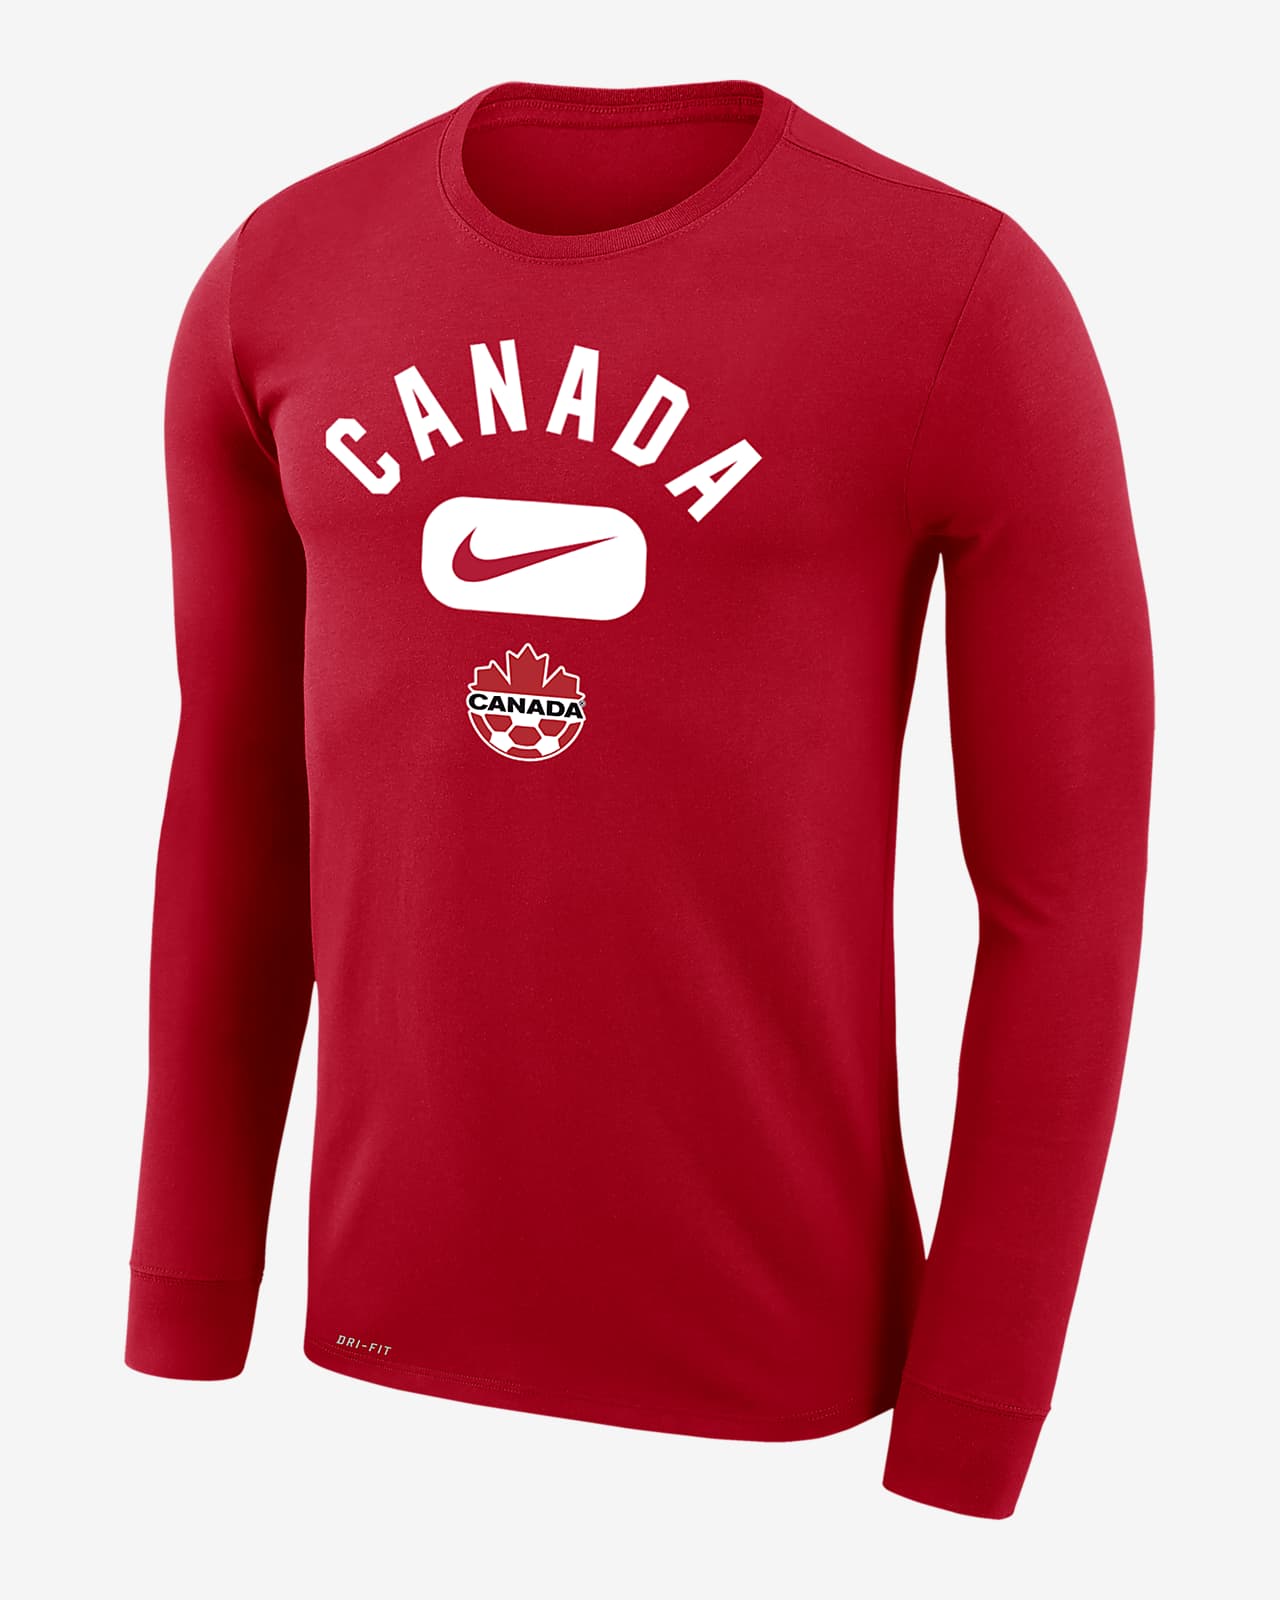 Canada Legend Men's Nike Dri-FIT Long-Sleeve T-Shirt